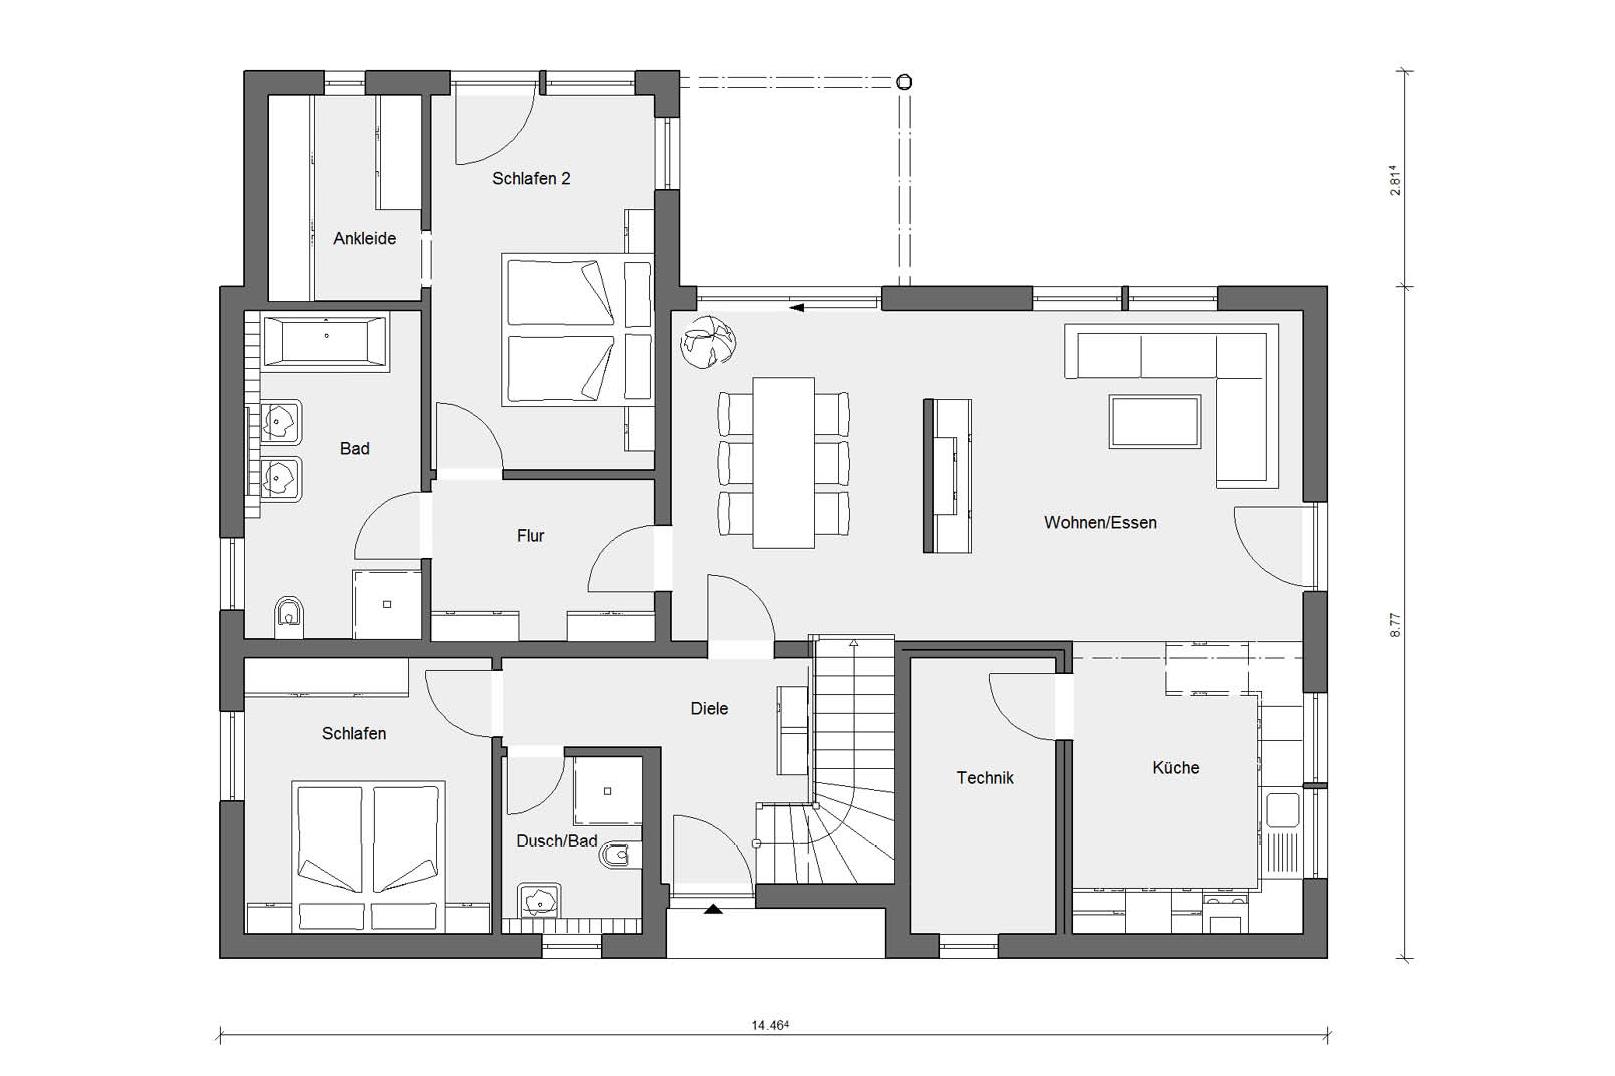 Floor plan ground floor E 15-244.1 Country house modern